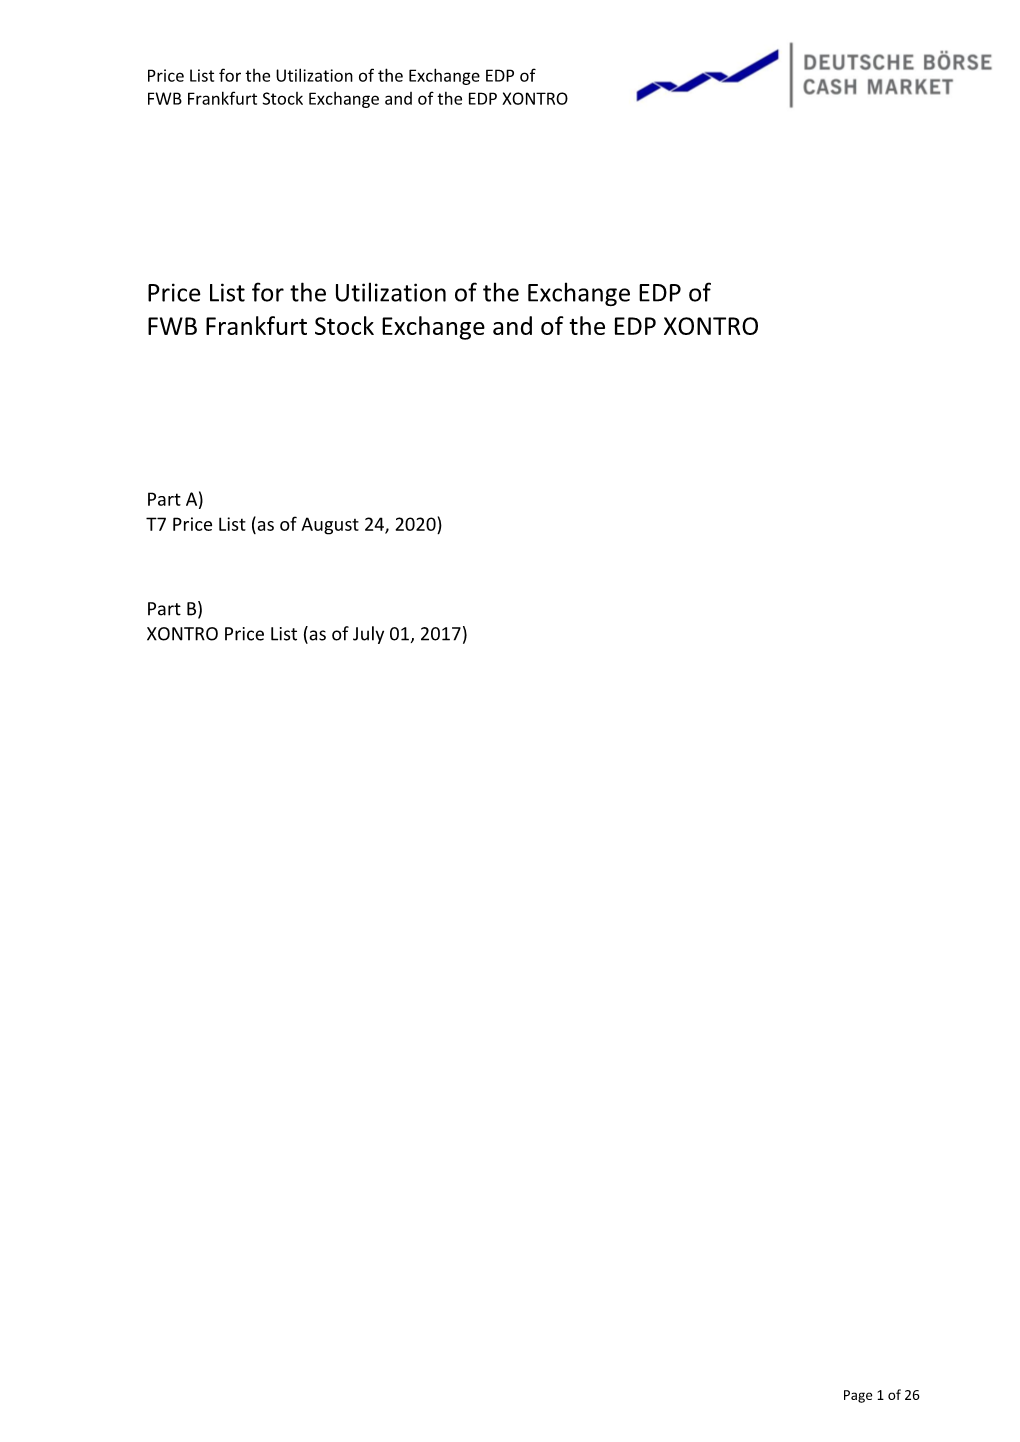 Price List for the Utilization of the Exchange EDP of FWB Frankfurt Stock Exchange and of the EDP XONTRO